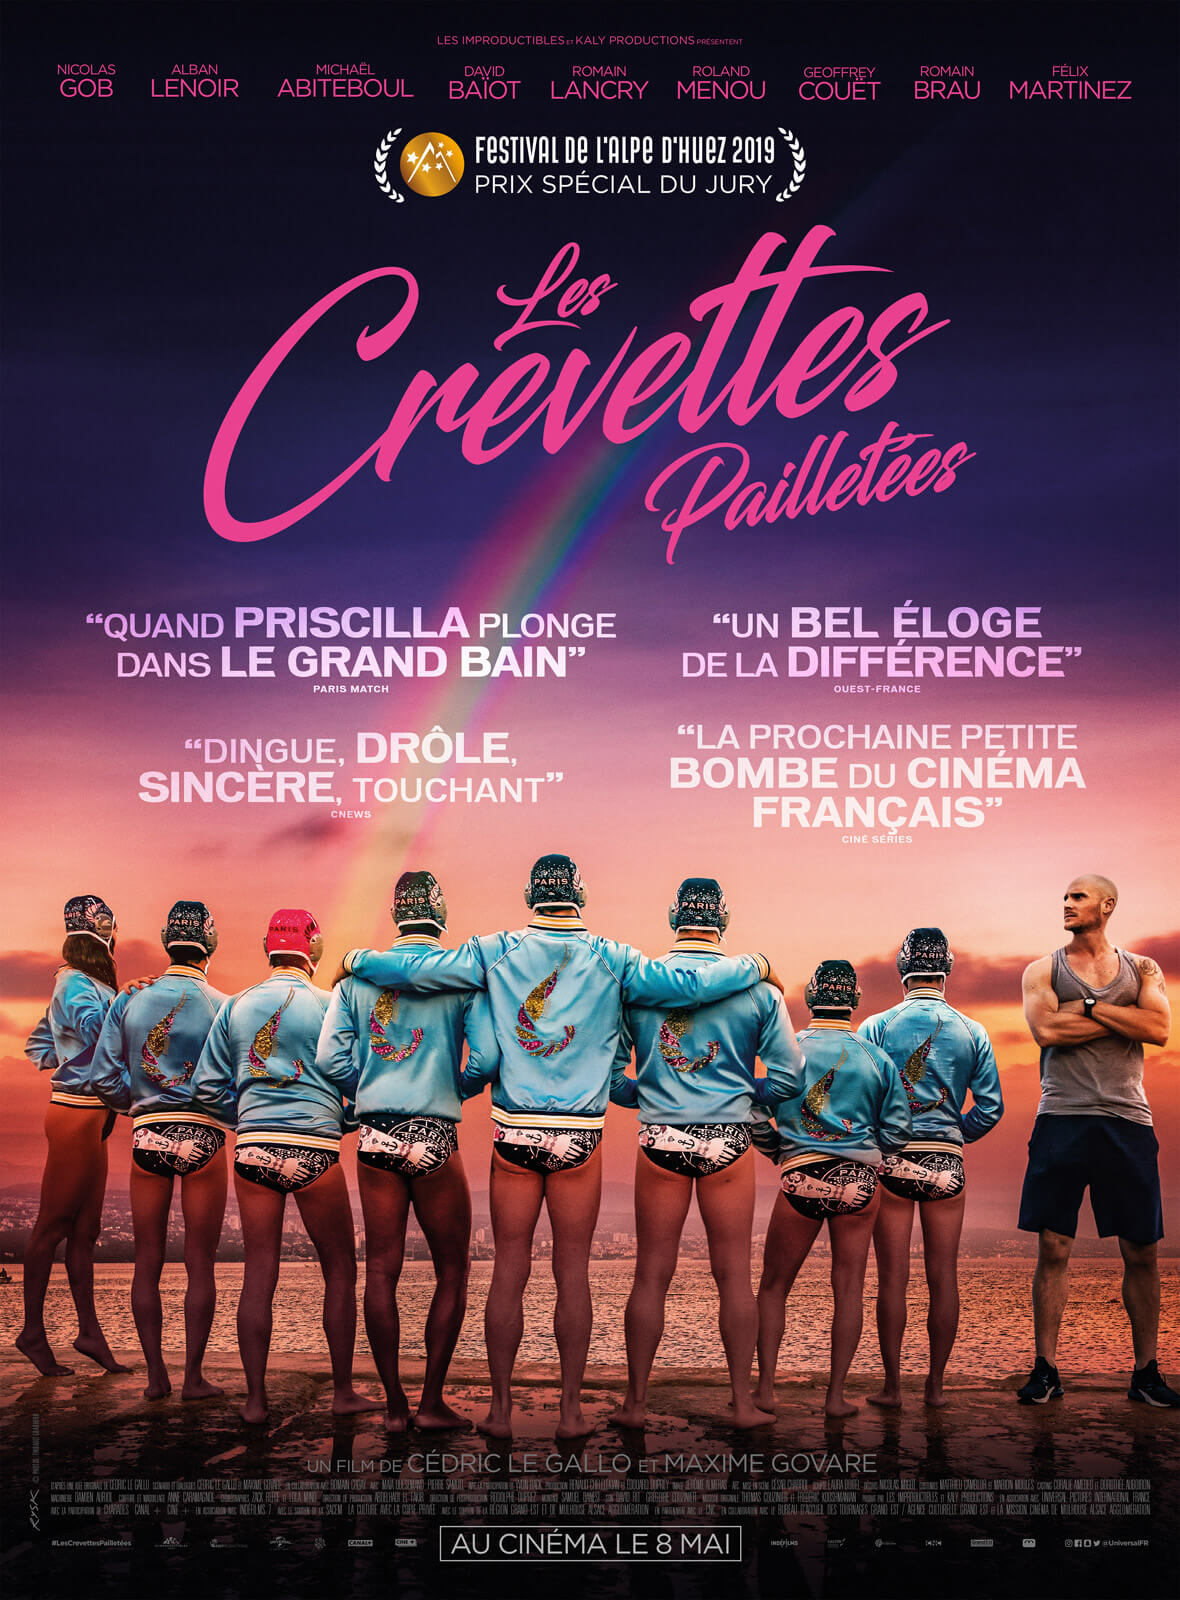 Les Crevettes pailletées, trailer e poster della commedia francese su una squadra di pallanuoto gay - Les Crevettes pailletees - Gay.it